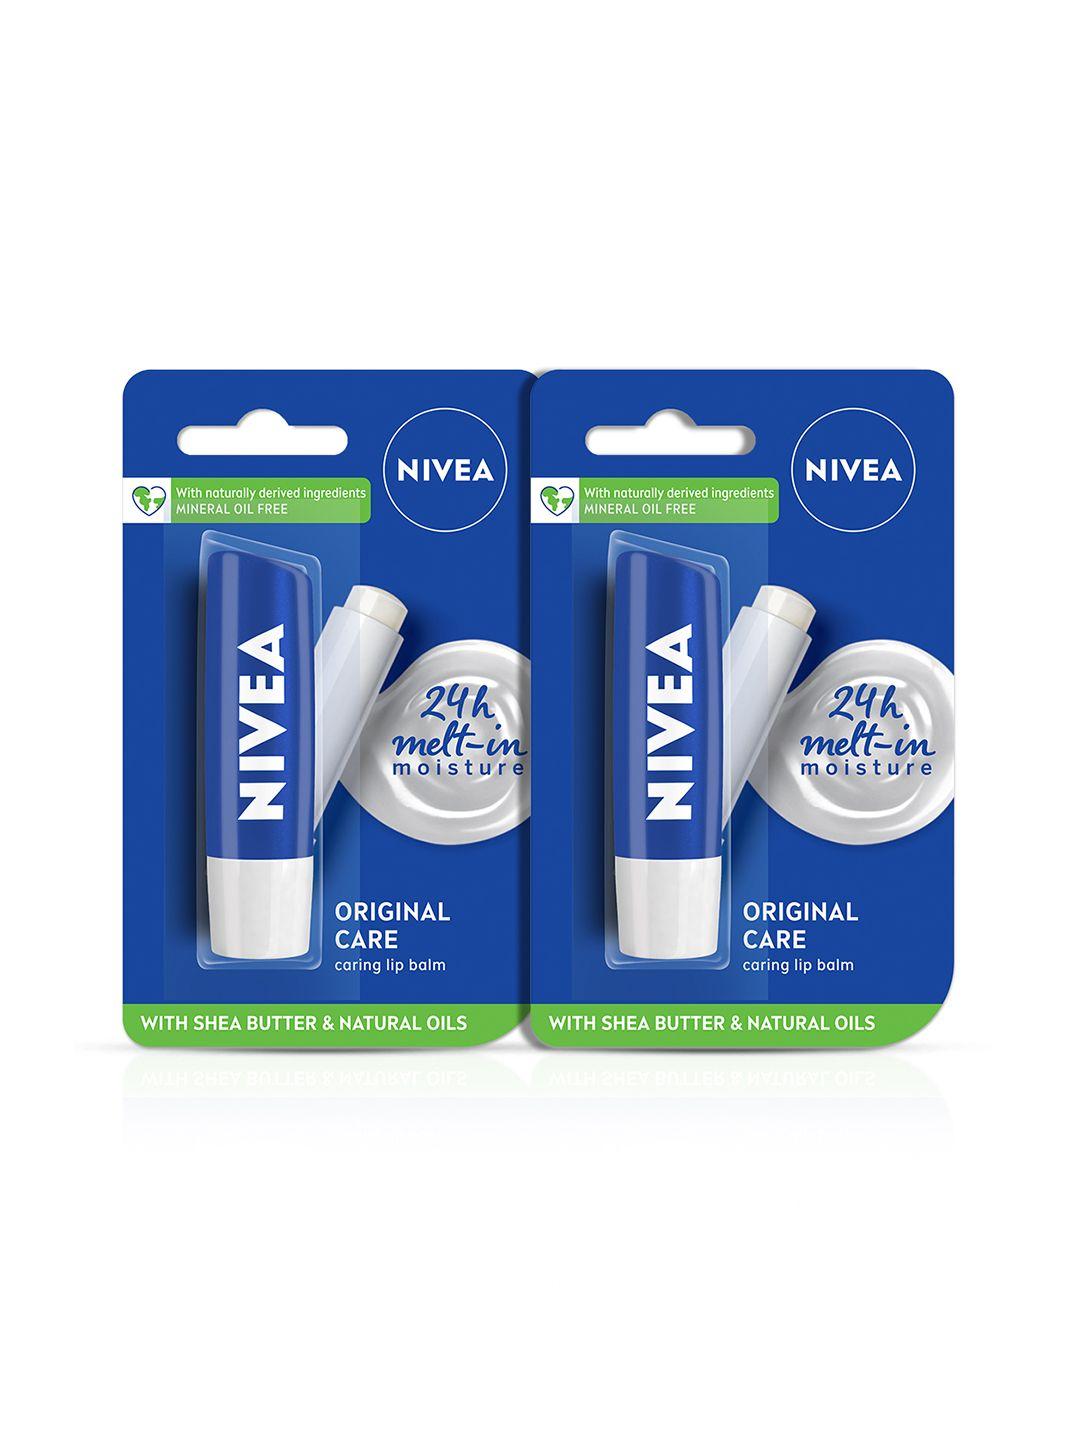 Nivea Set of 2 24 Hr Melt-In Moisture Original Care Lip Balm